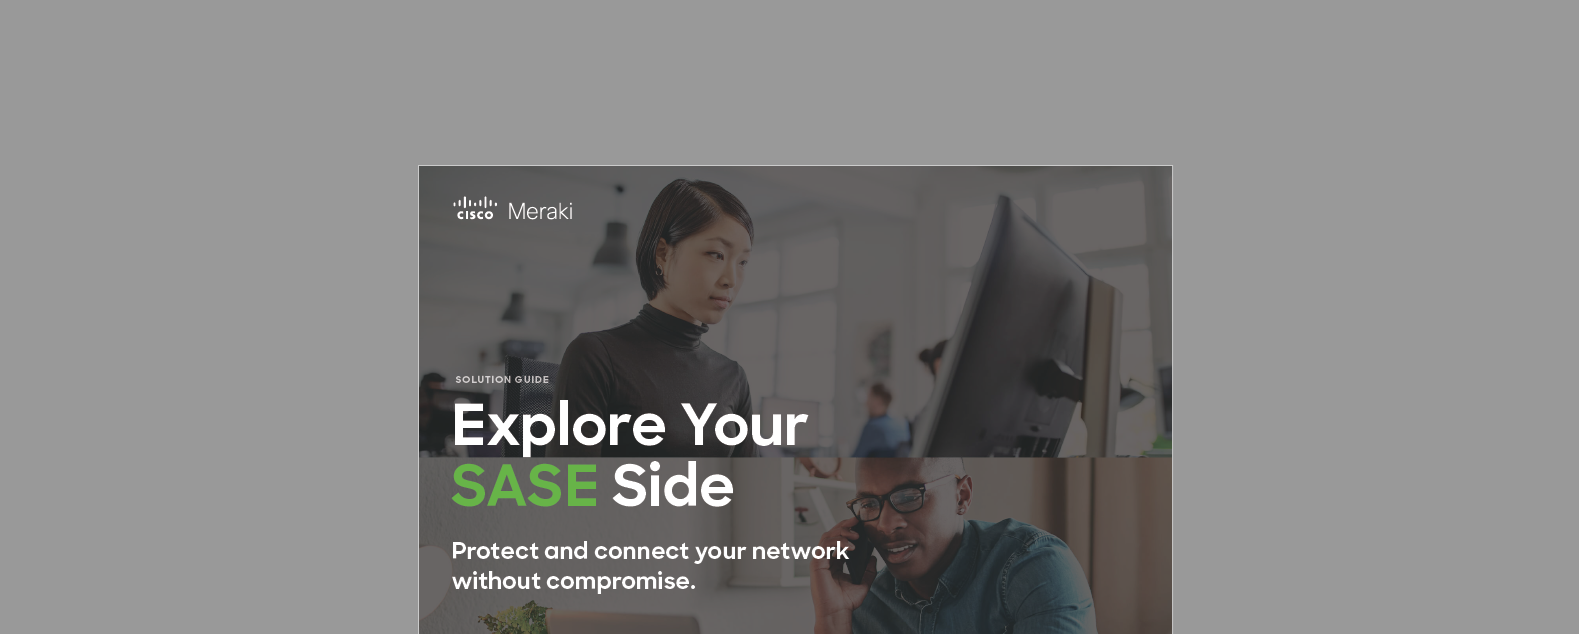 Article Explore Your SASE Side with Cisco Meraki Image